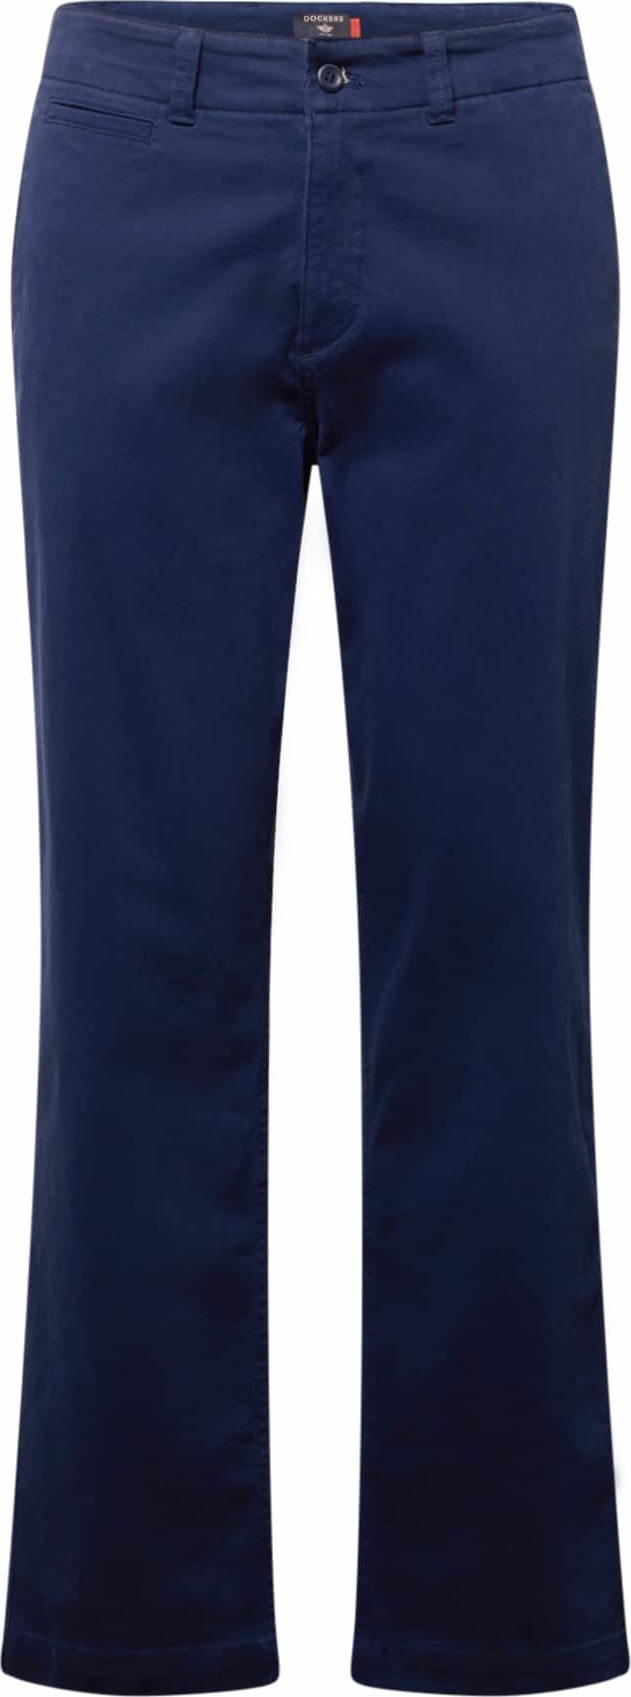 Chino kalhoty 'CALIFORNIA' Dockers námořnická modř